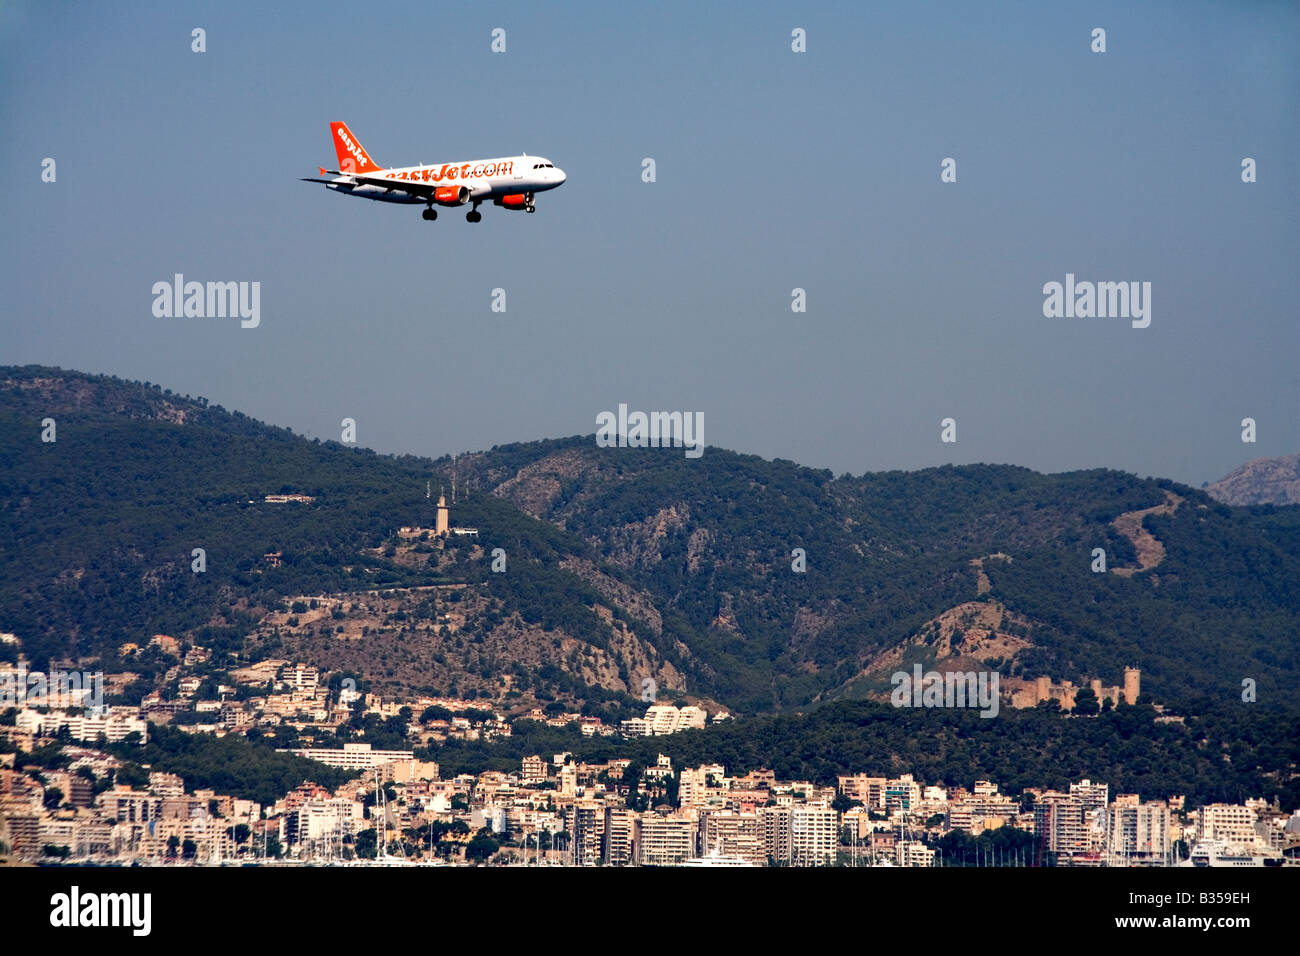 Easyjet flight landing at Mallorca Majorca airport Spain Stock Photo